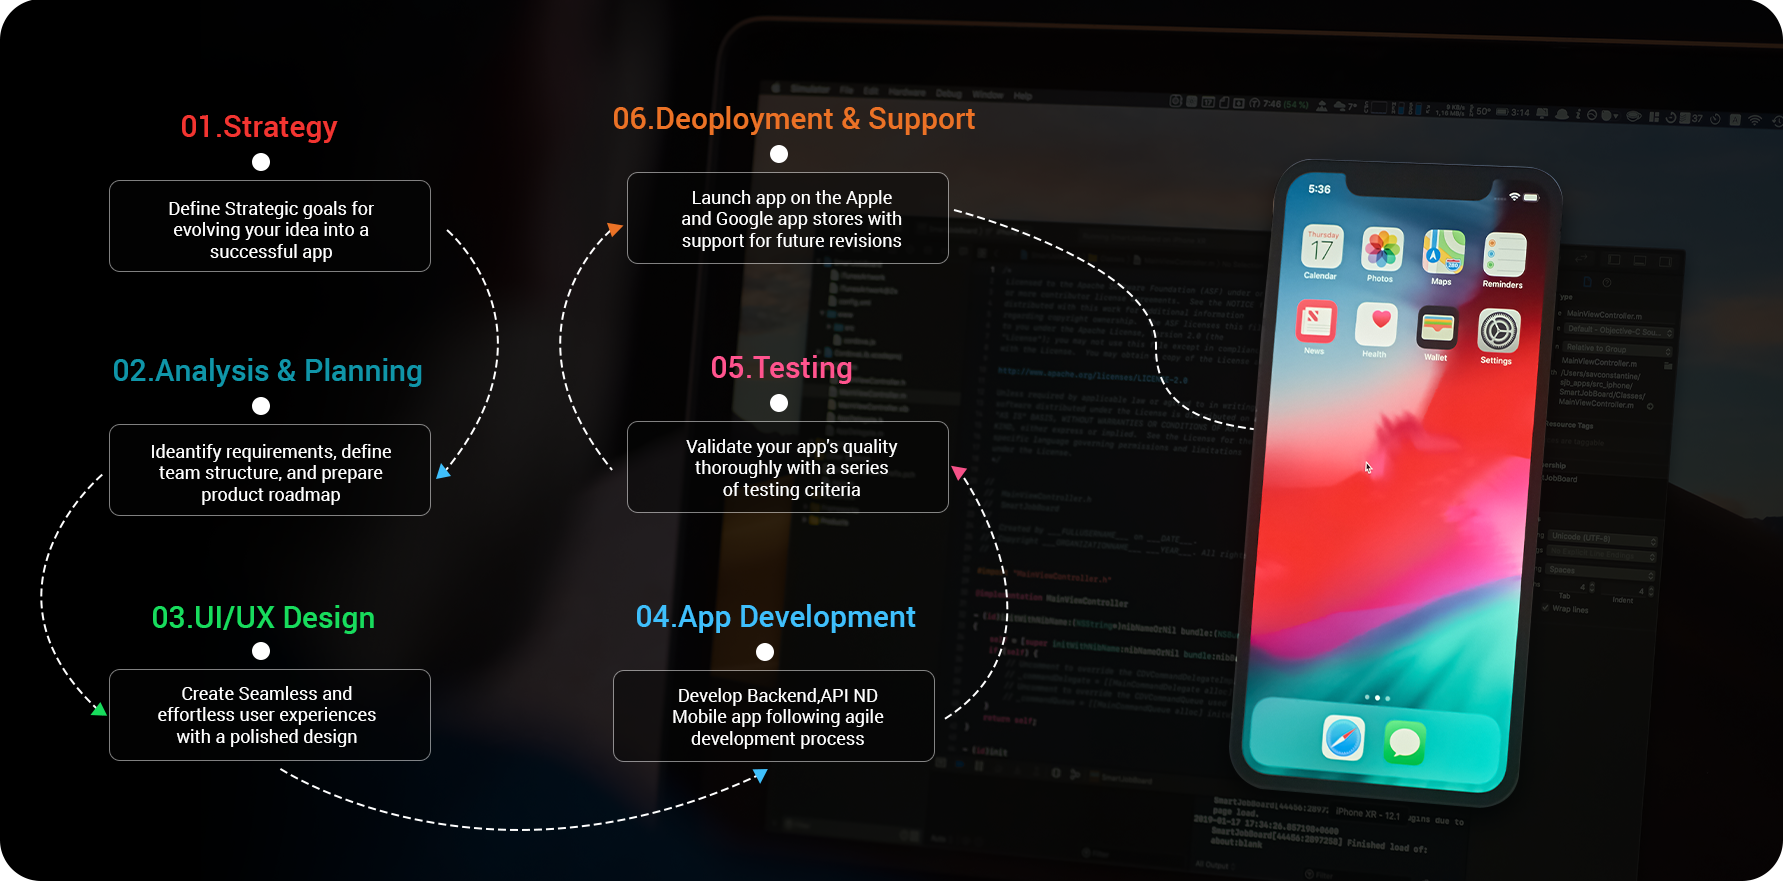 Mobile App Development Process